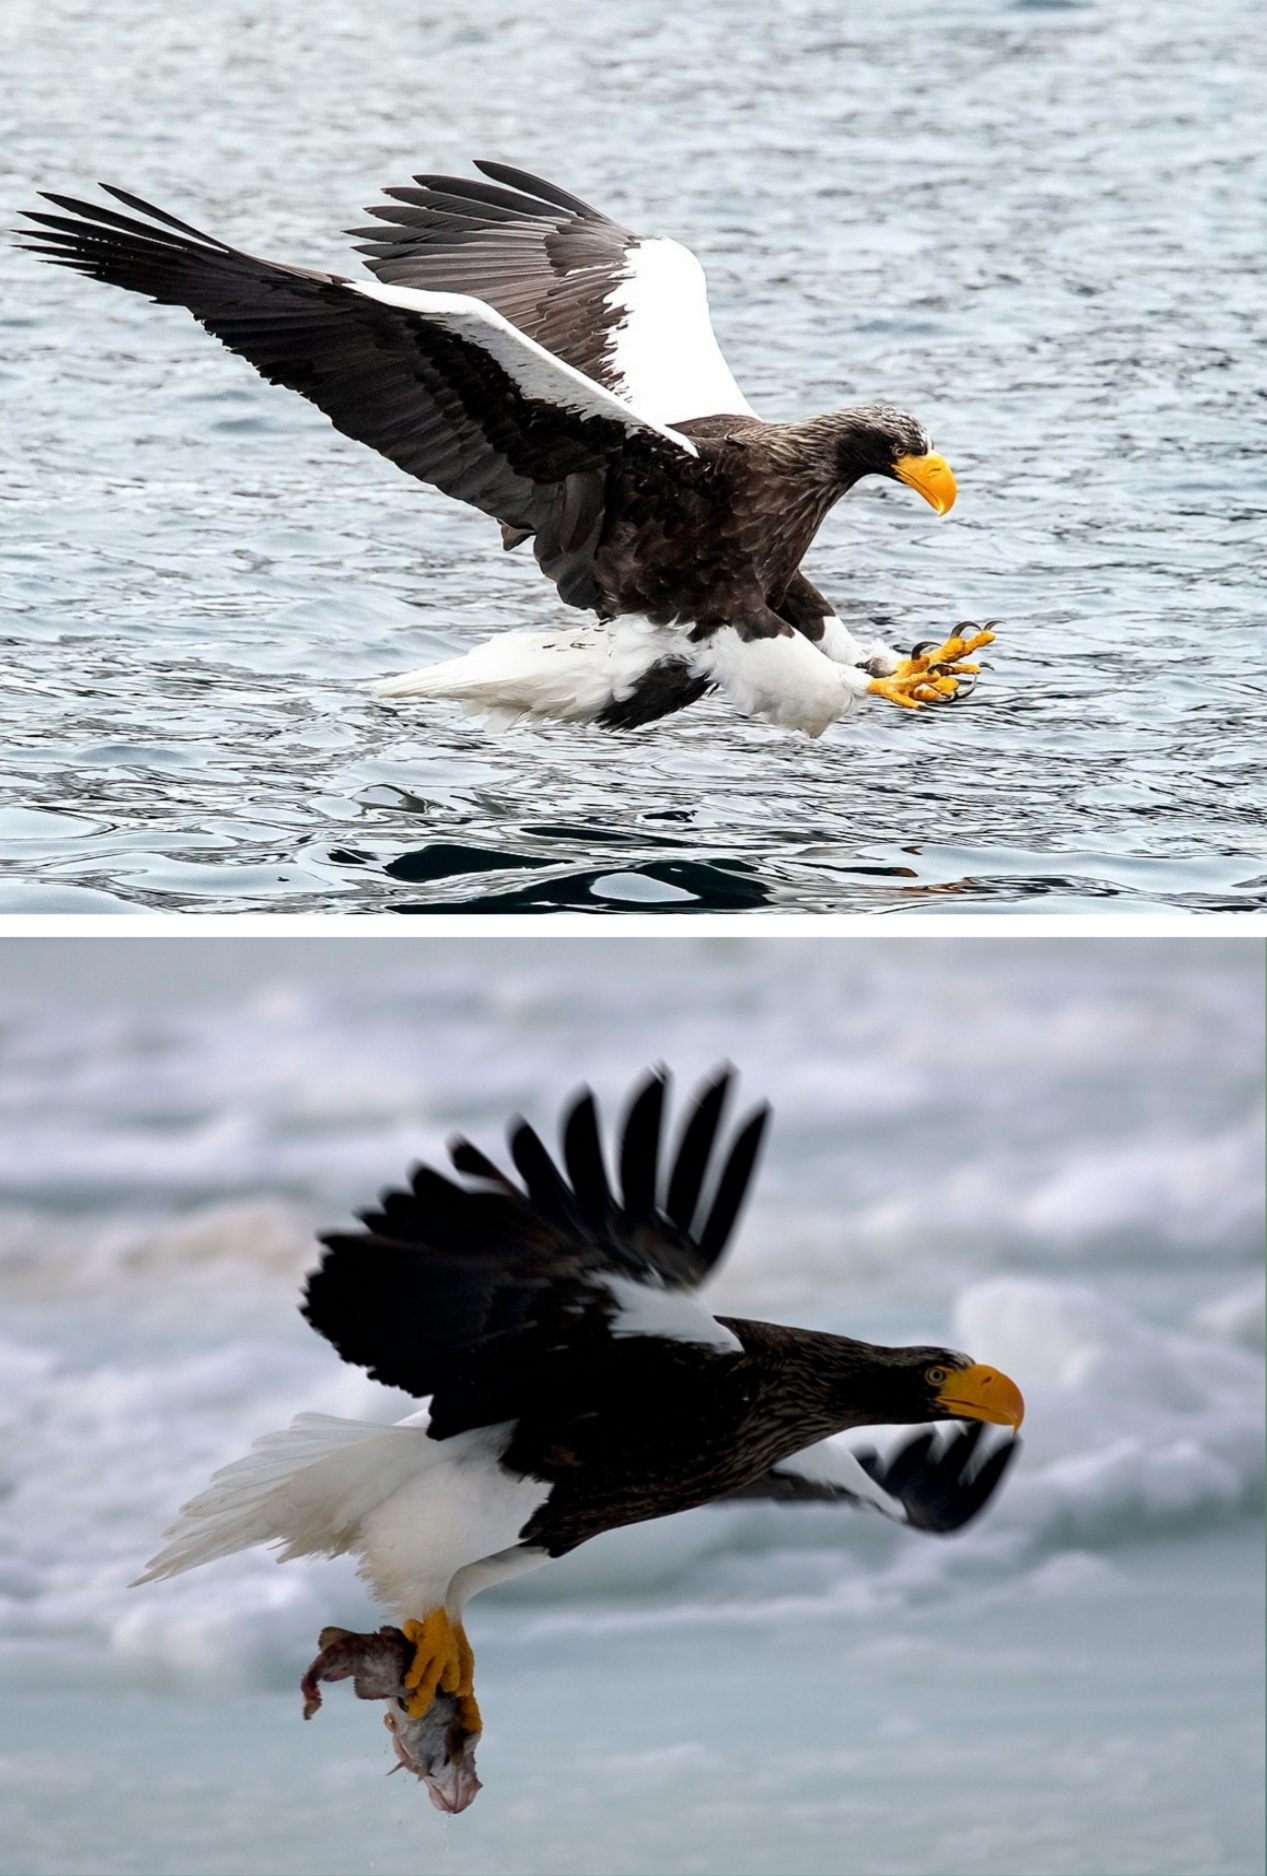 File:Steller's Sea Eagle hunting a fish.jpg - Wikipedia